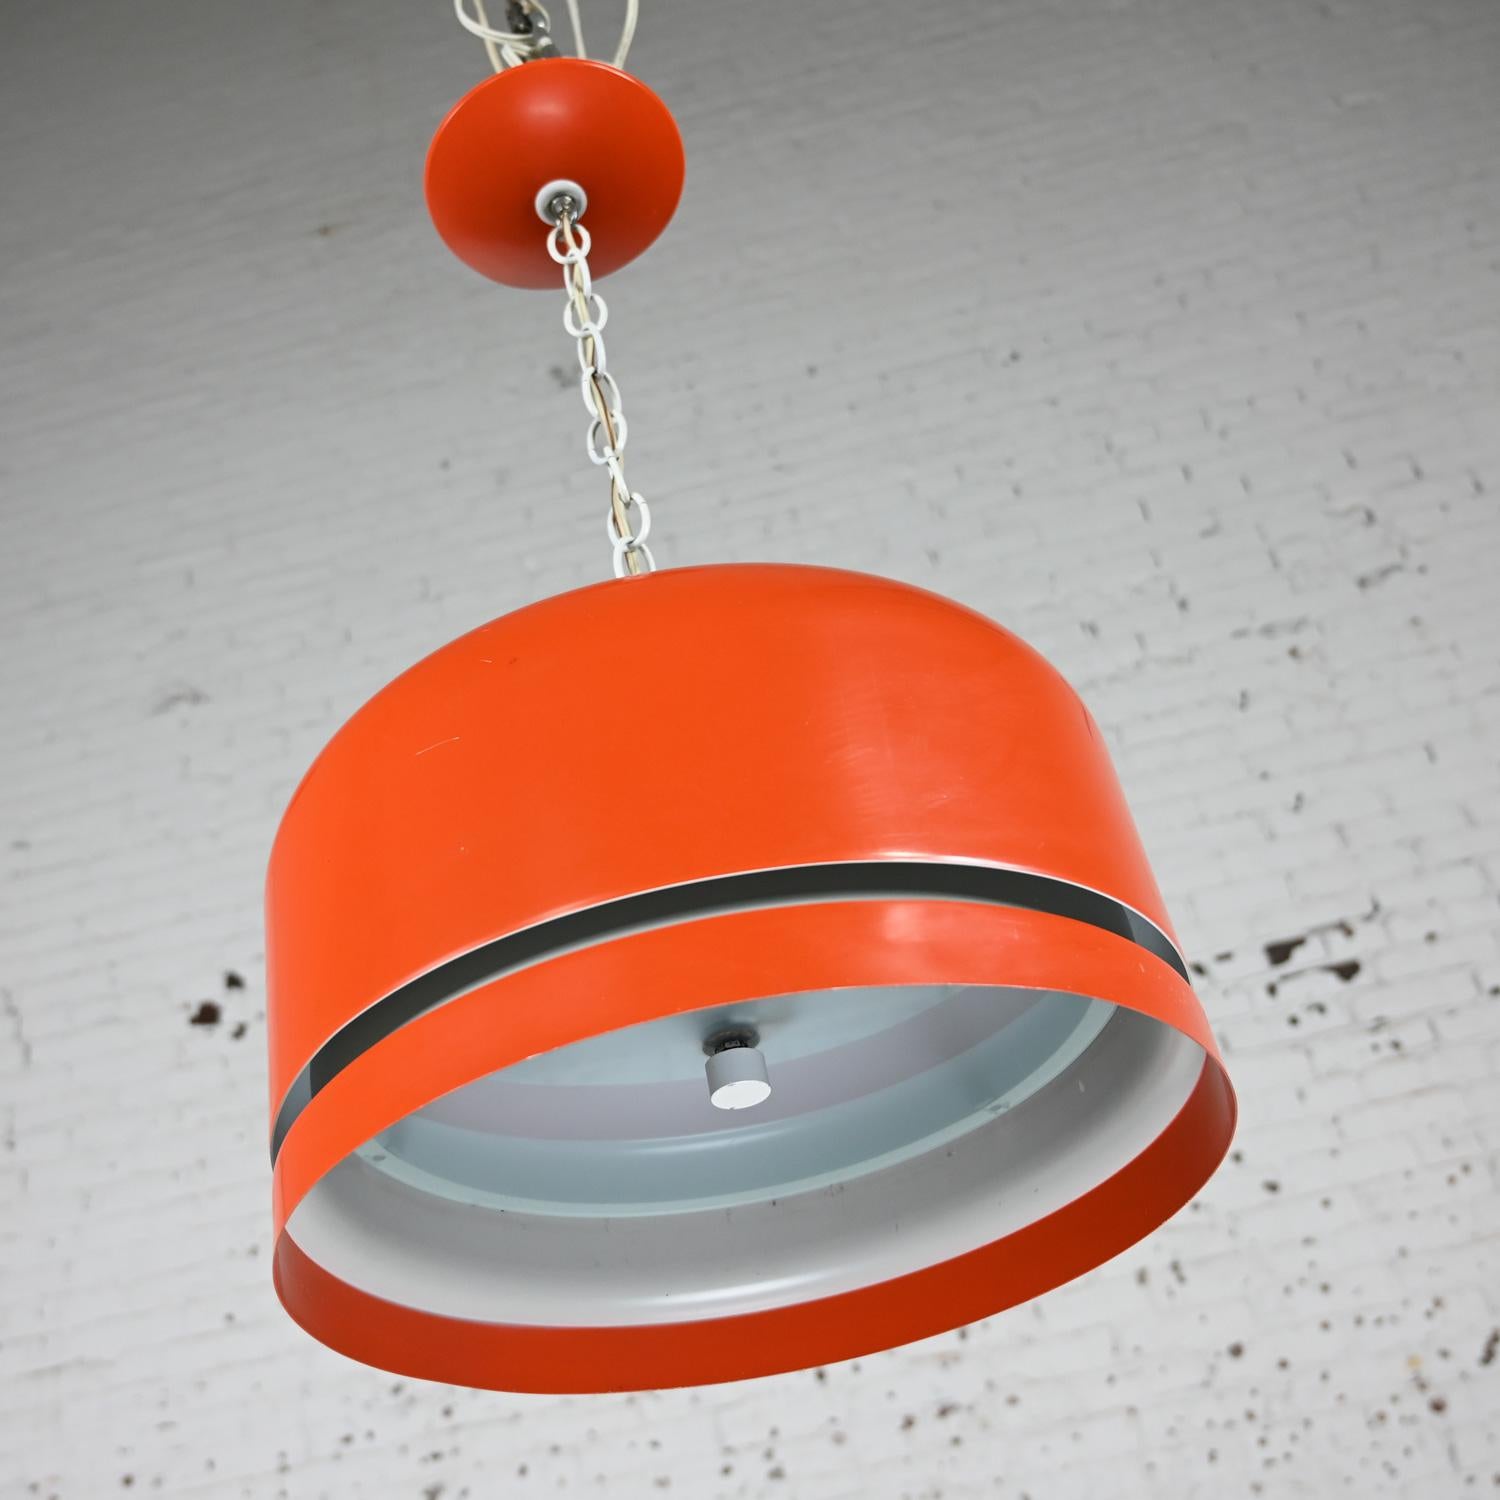 20th Century Mid Century Modern Orange Dome Pendant Hanging Light Fixture by Lightolier For Sale